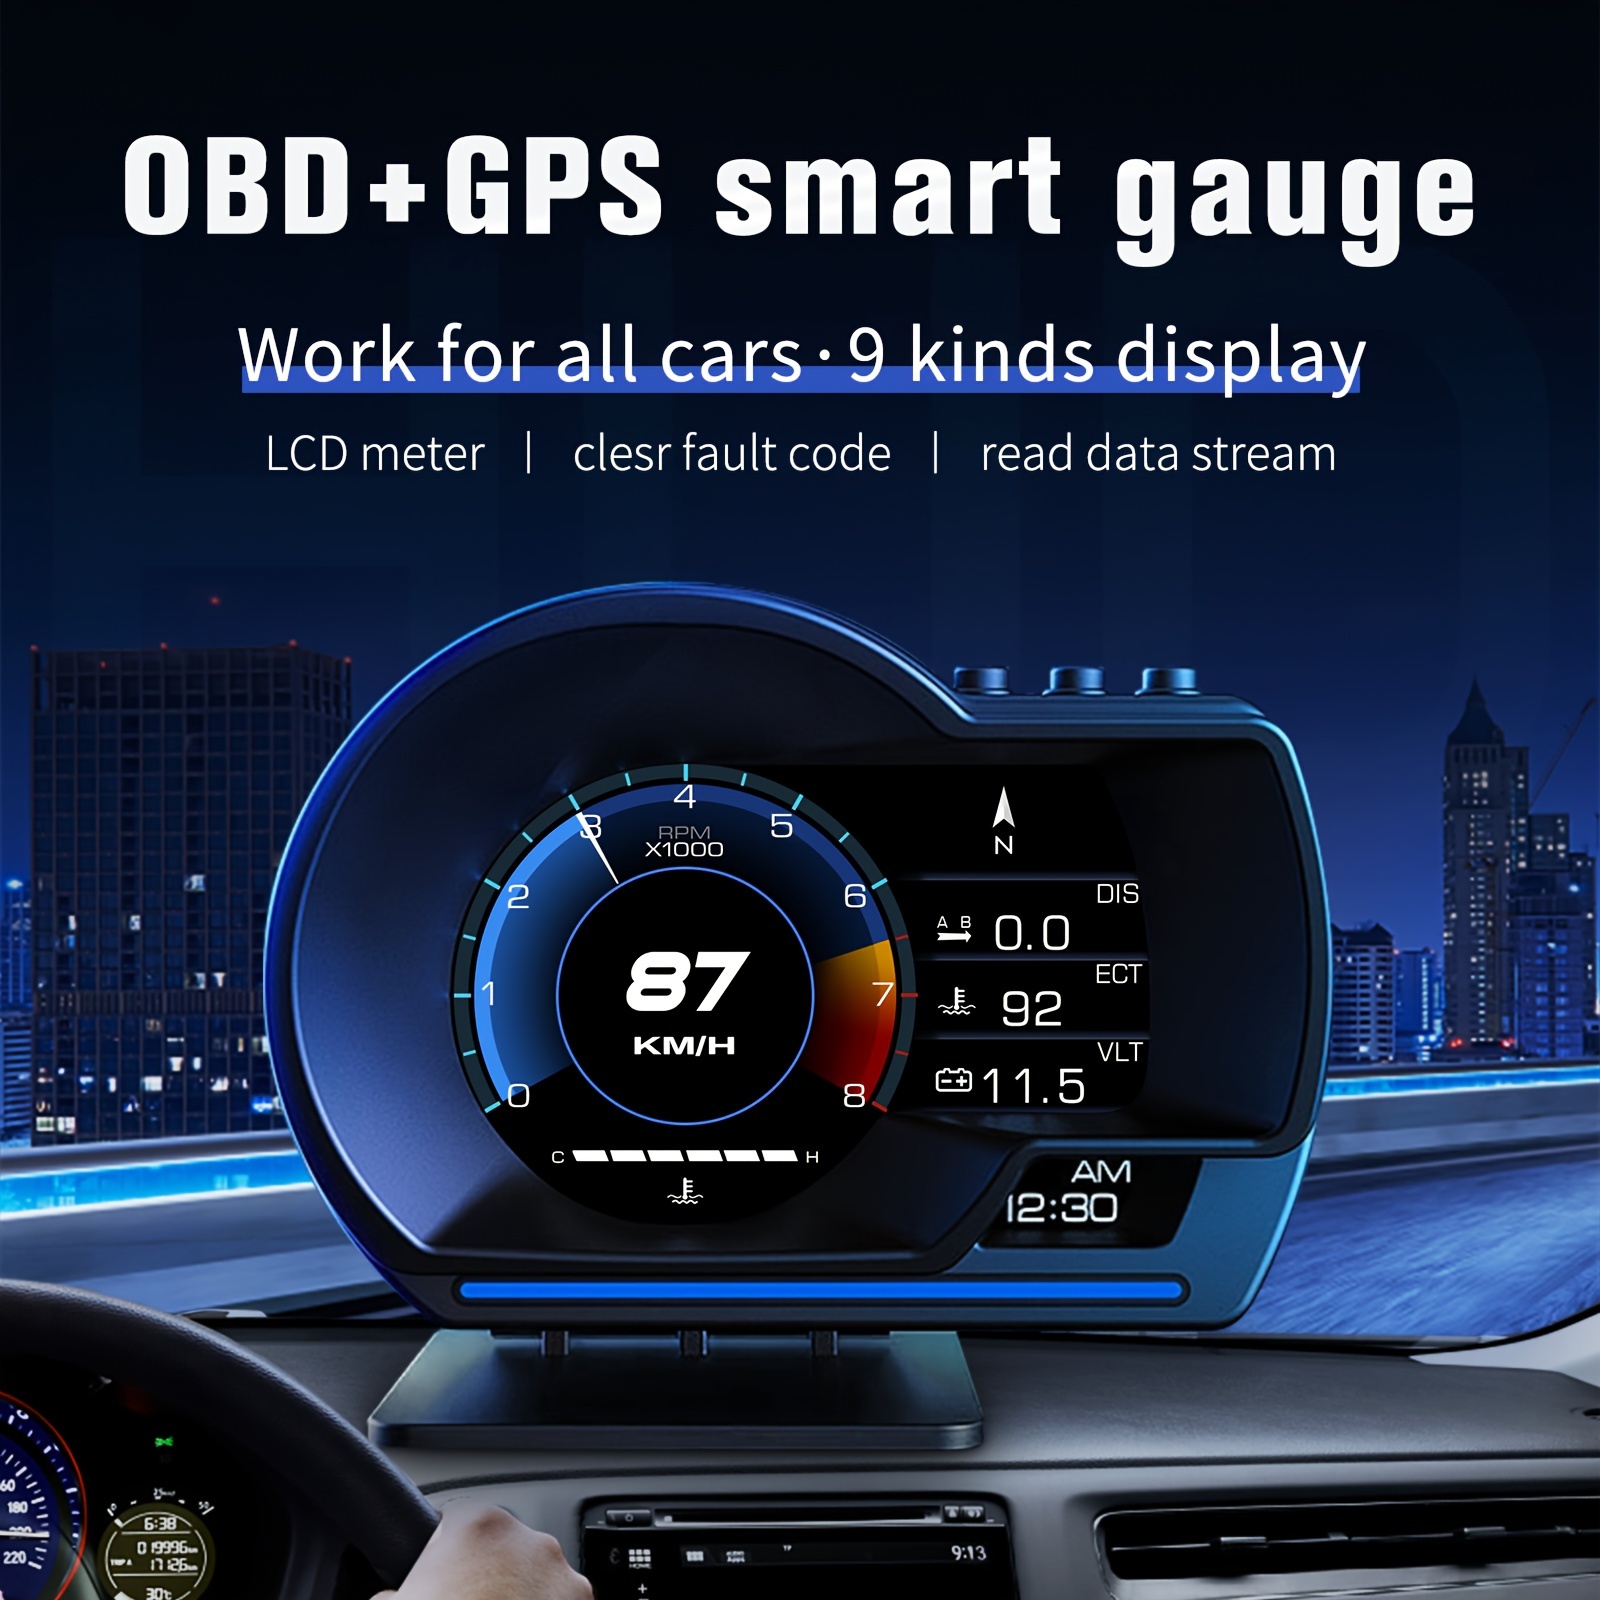 Multi Function Universal Car HUD Head Up Display with OBD2 – Mega Motor  Sports